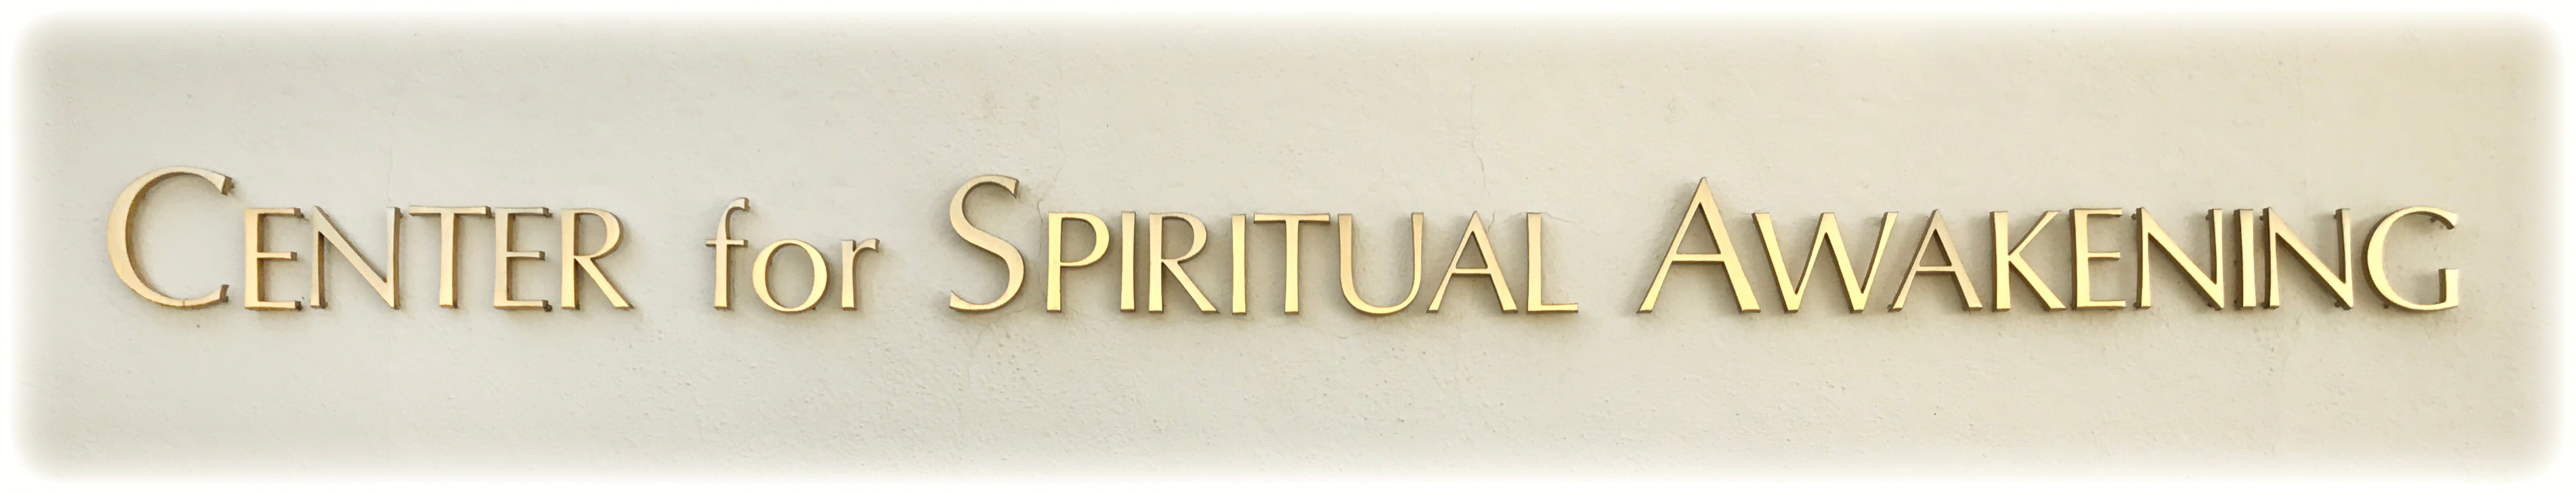 Center for Spiritual Awakening live streaming services